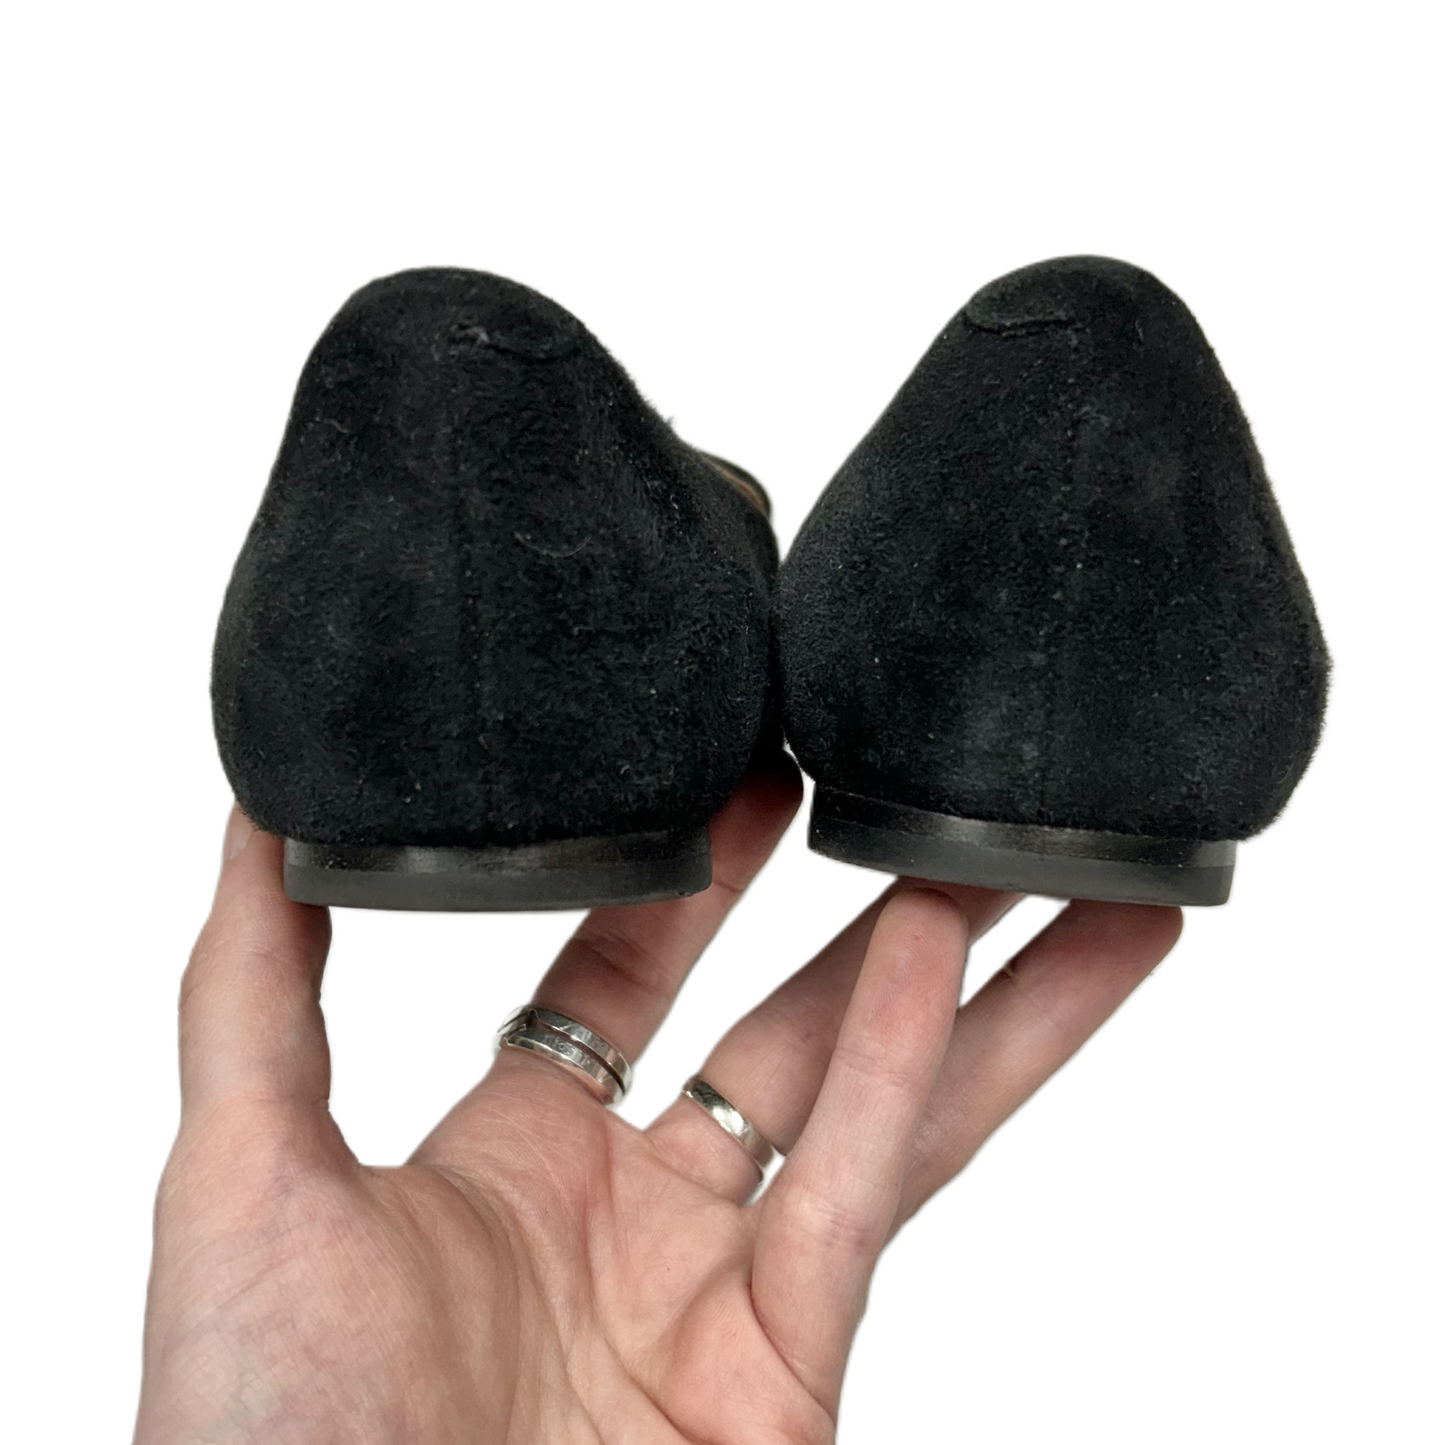 Black Shoes Flats By J. Jill, Size: 8.5